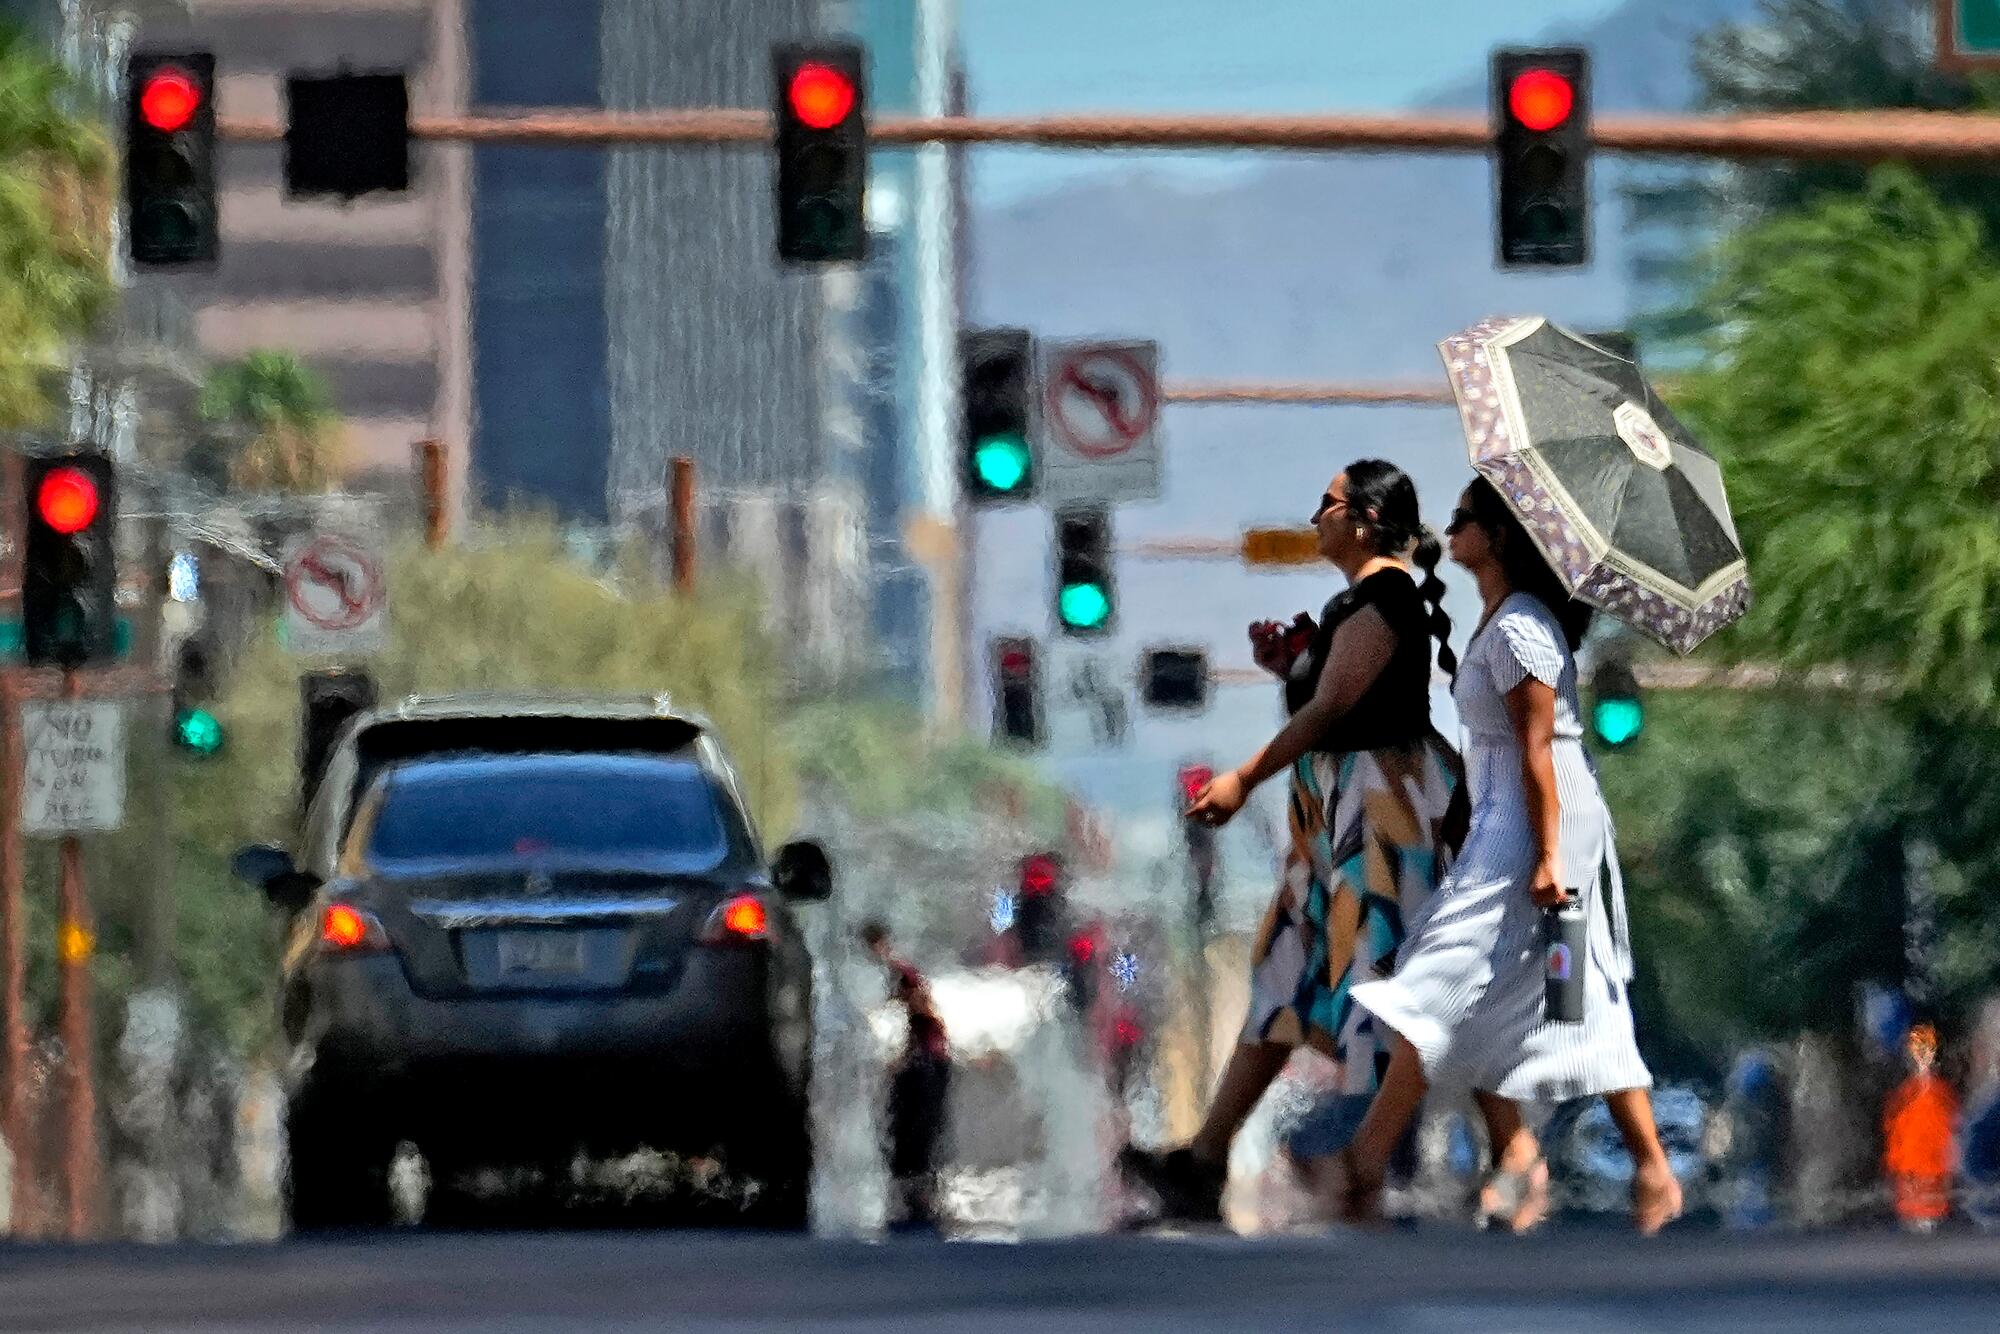 Heat ripples from hot asphalt as two women cross a street.